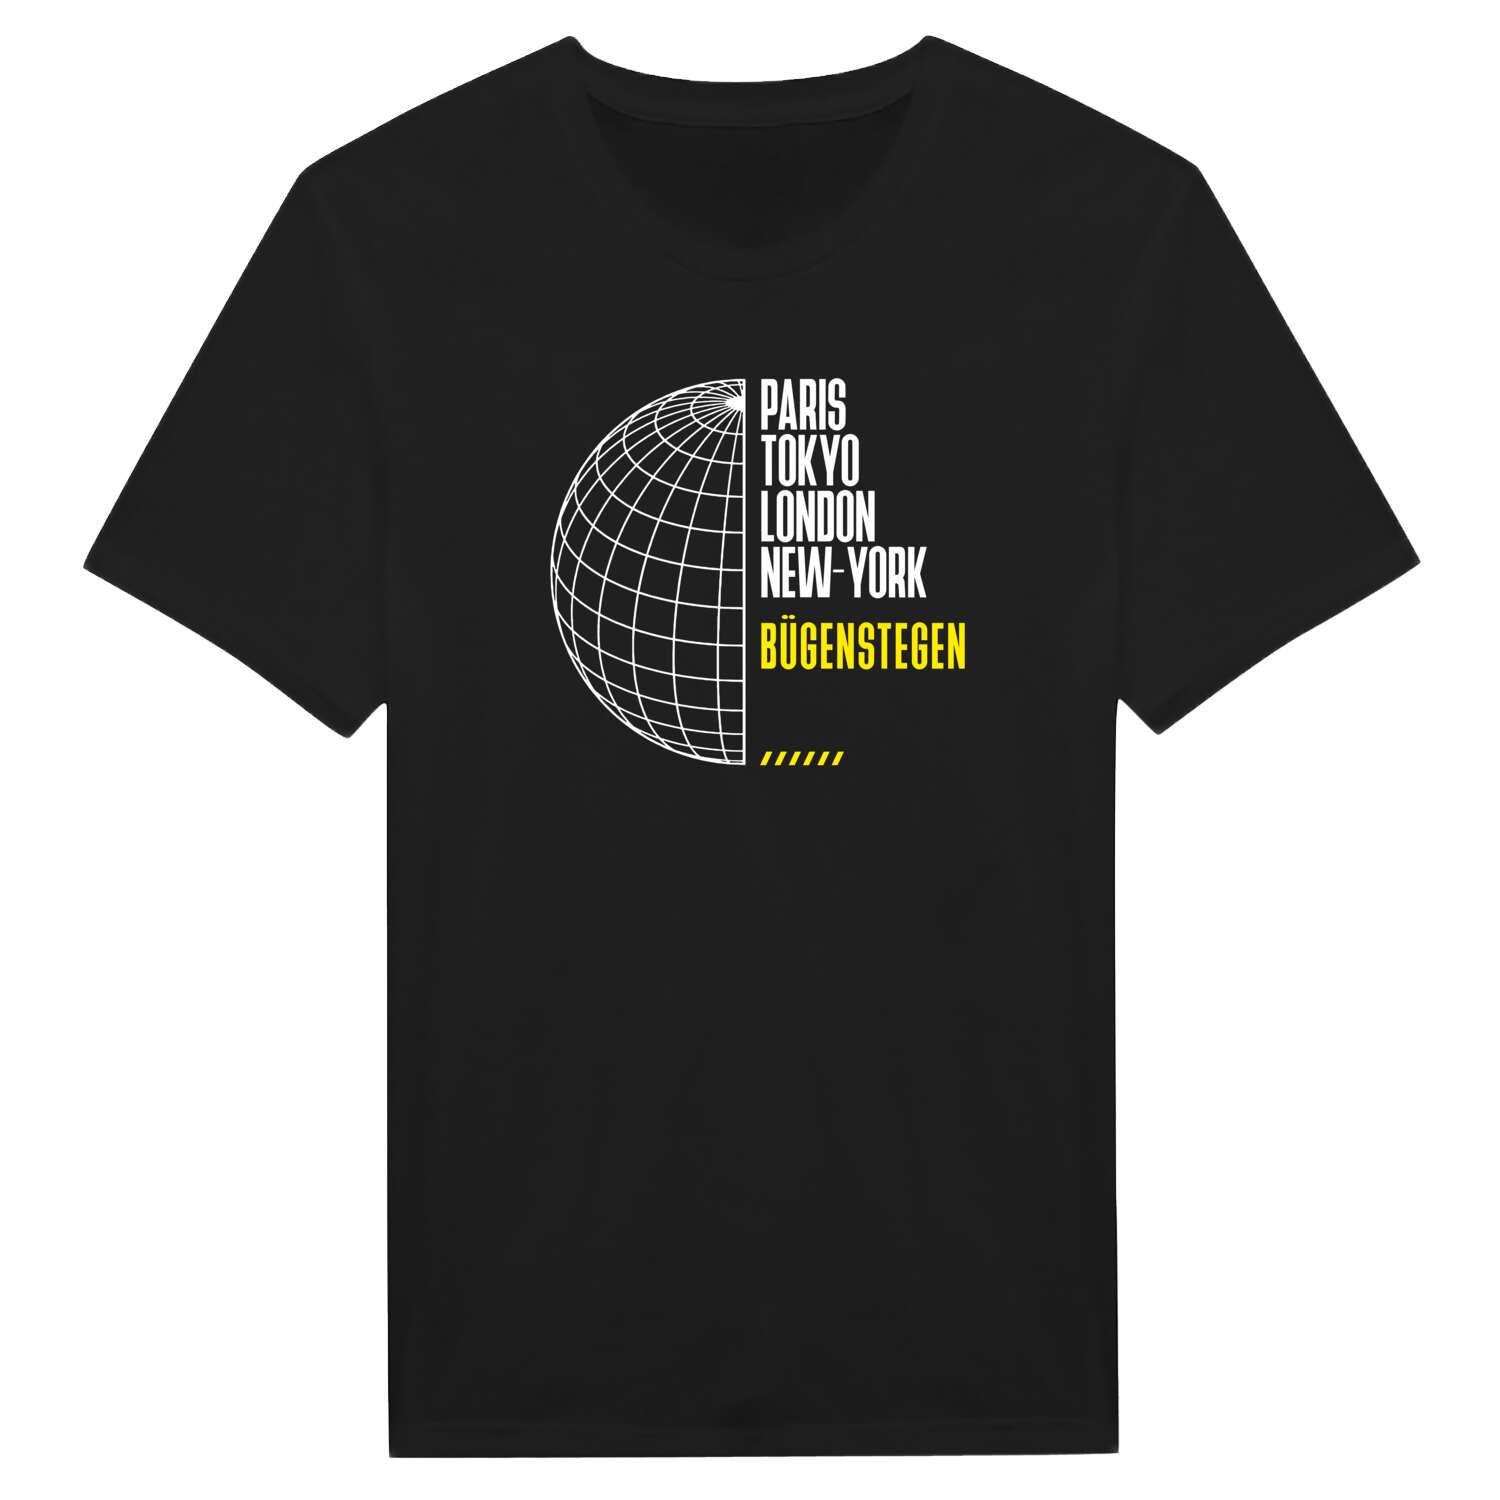 Bügenstegen T-Shirt »Paris Tokyo London«